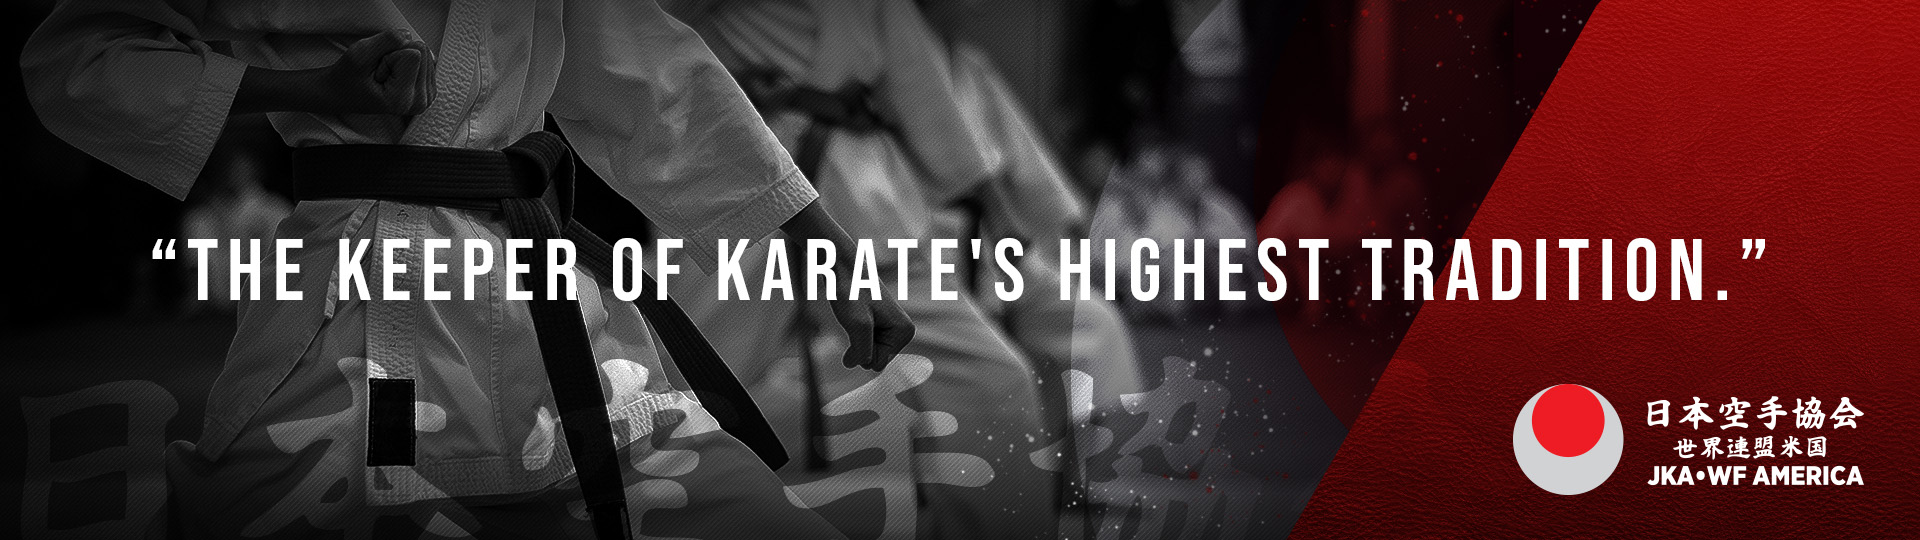 1920x540-jka-wf-america-keepers-of-karates-highest-tradition-header3